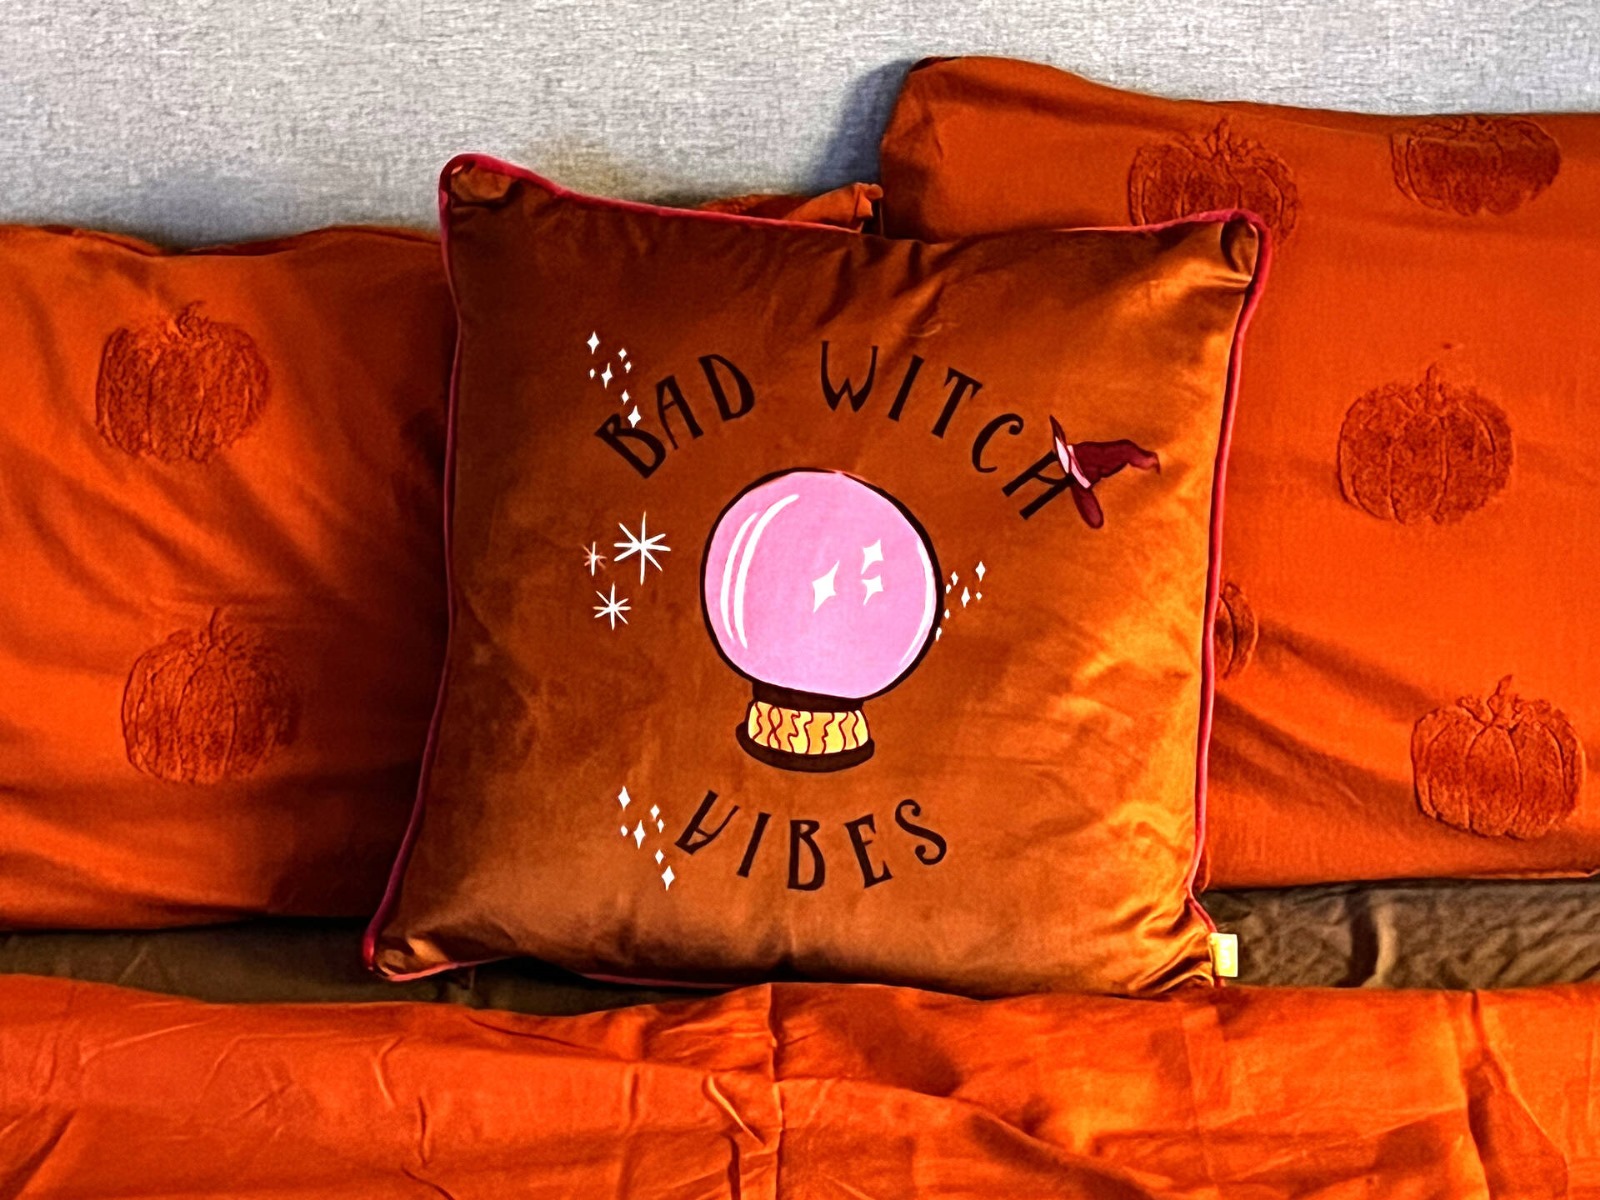 Bad Witch velvet cushion